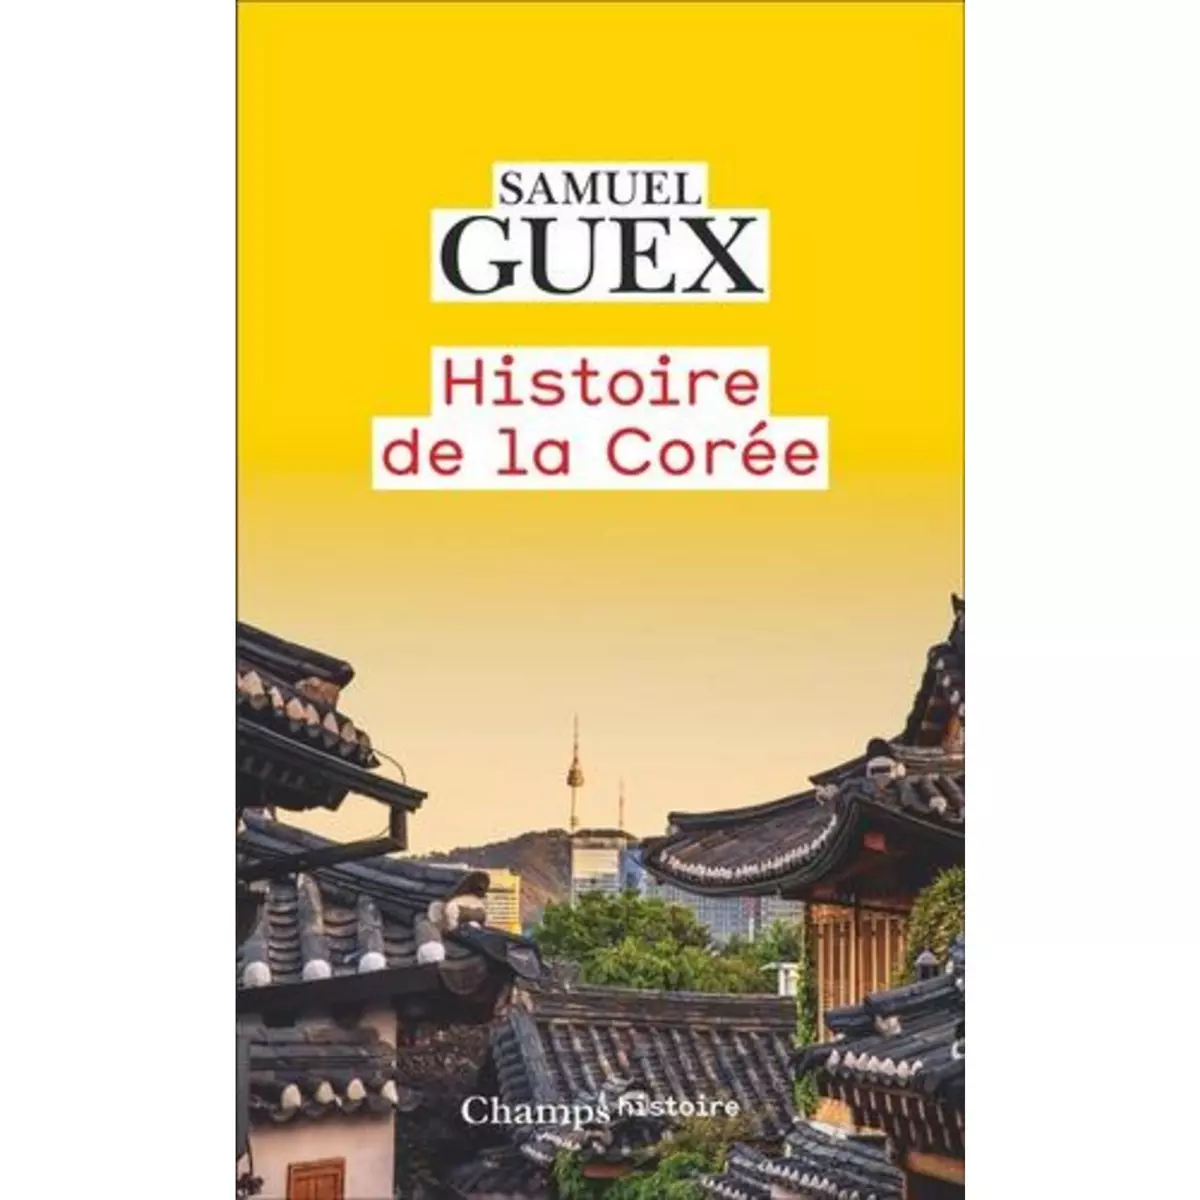  HISTOIRE DE LA COREE, Guex Samuel